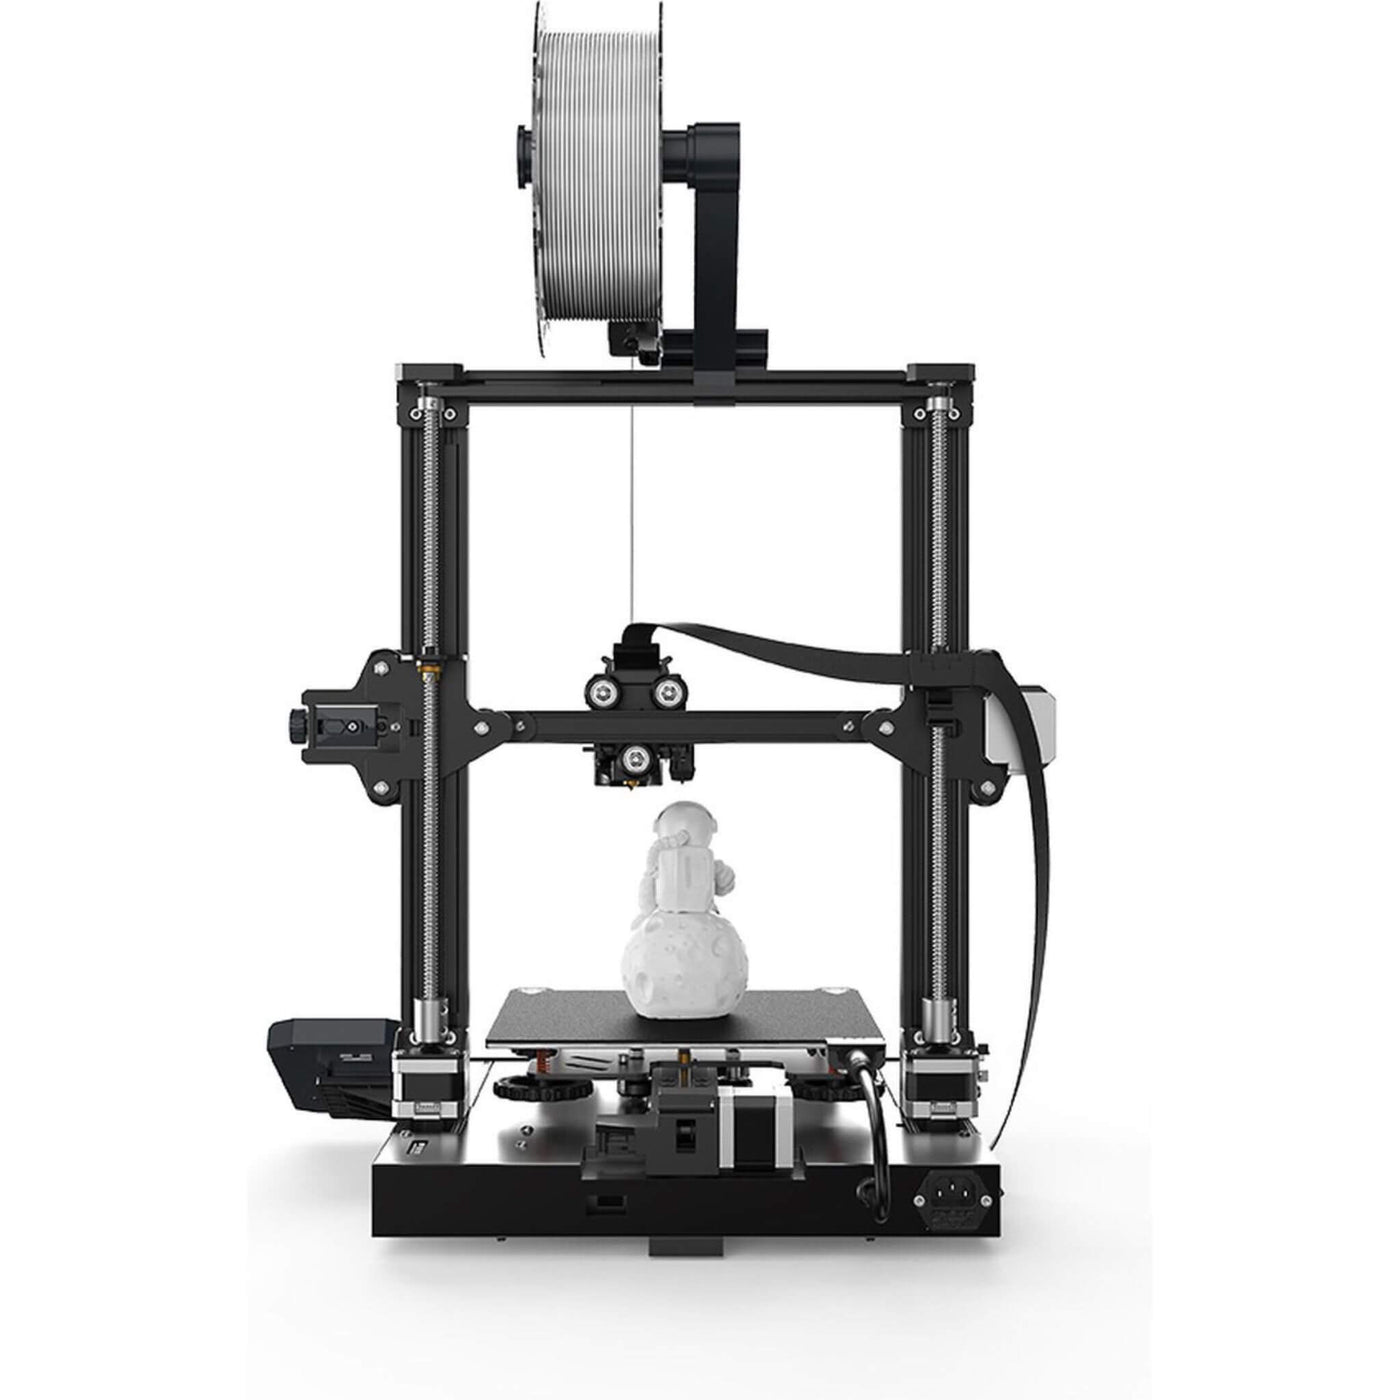 Creality Ender 3 S1 - 3D printer